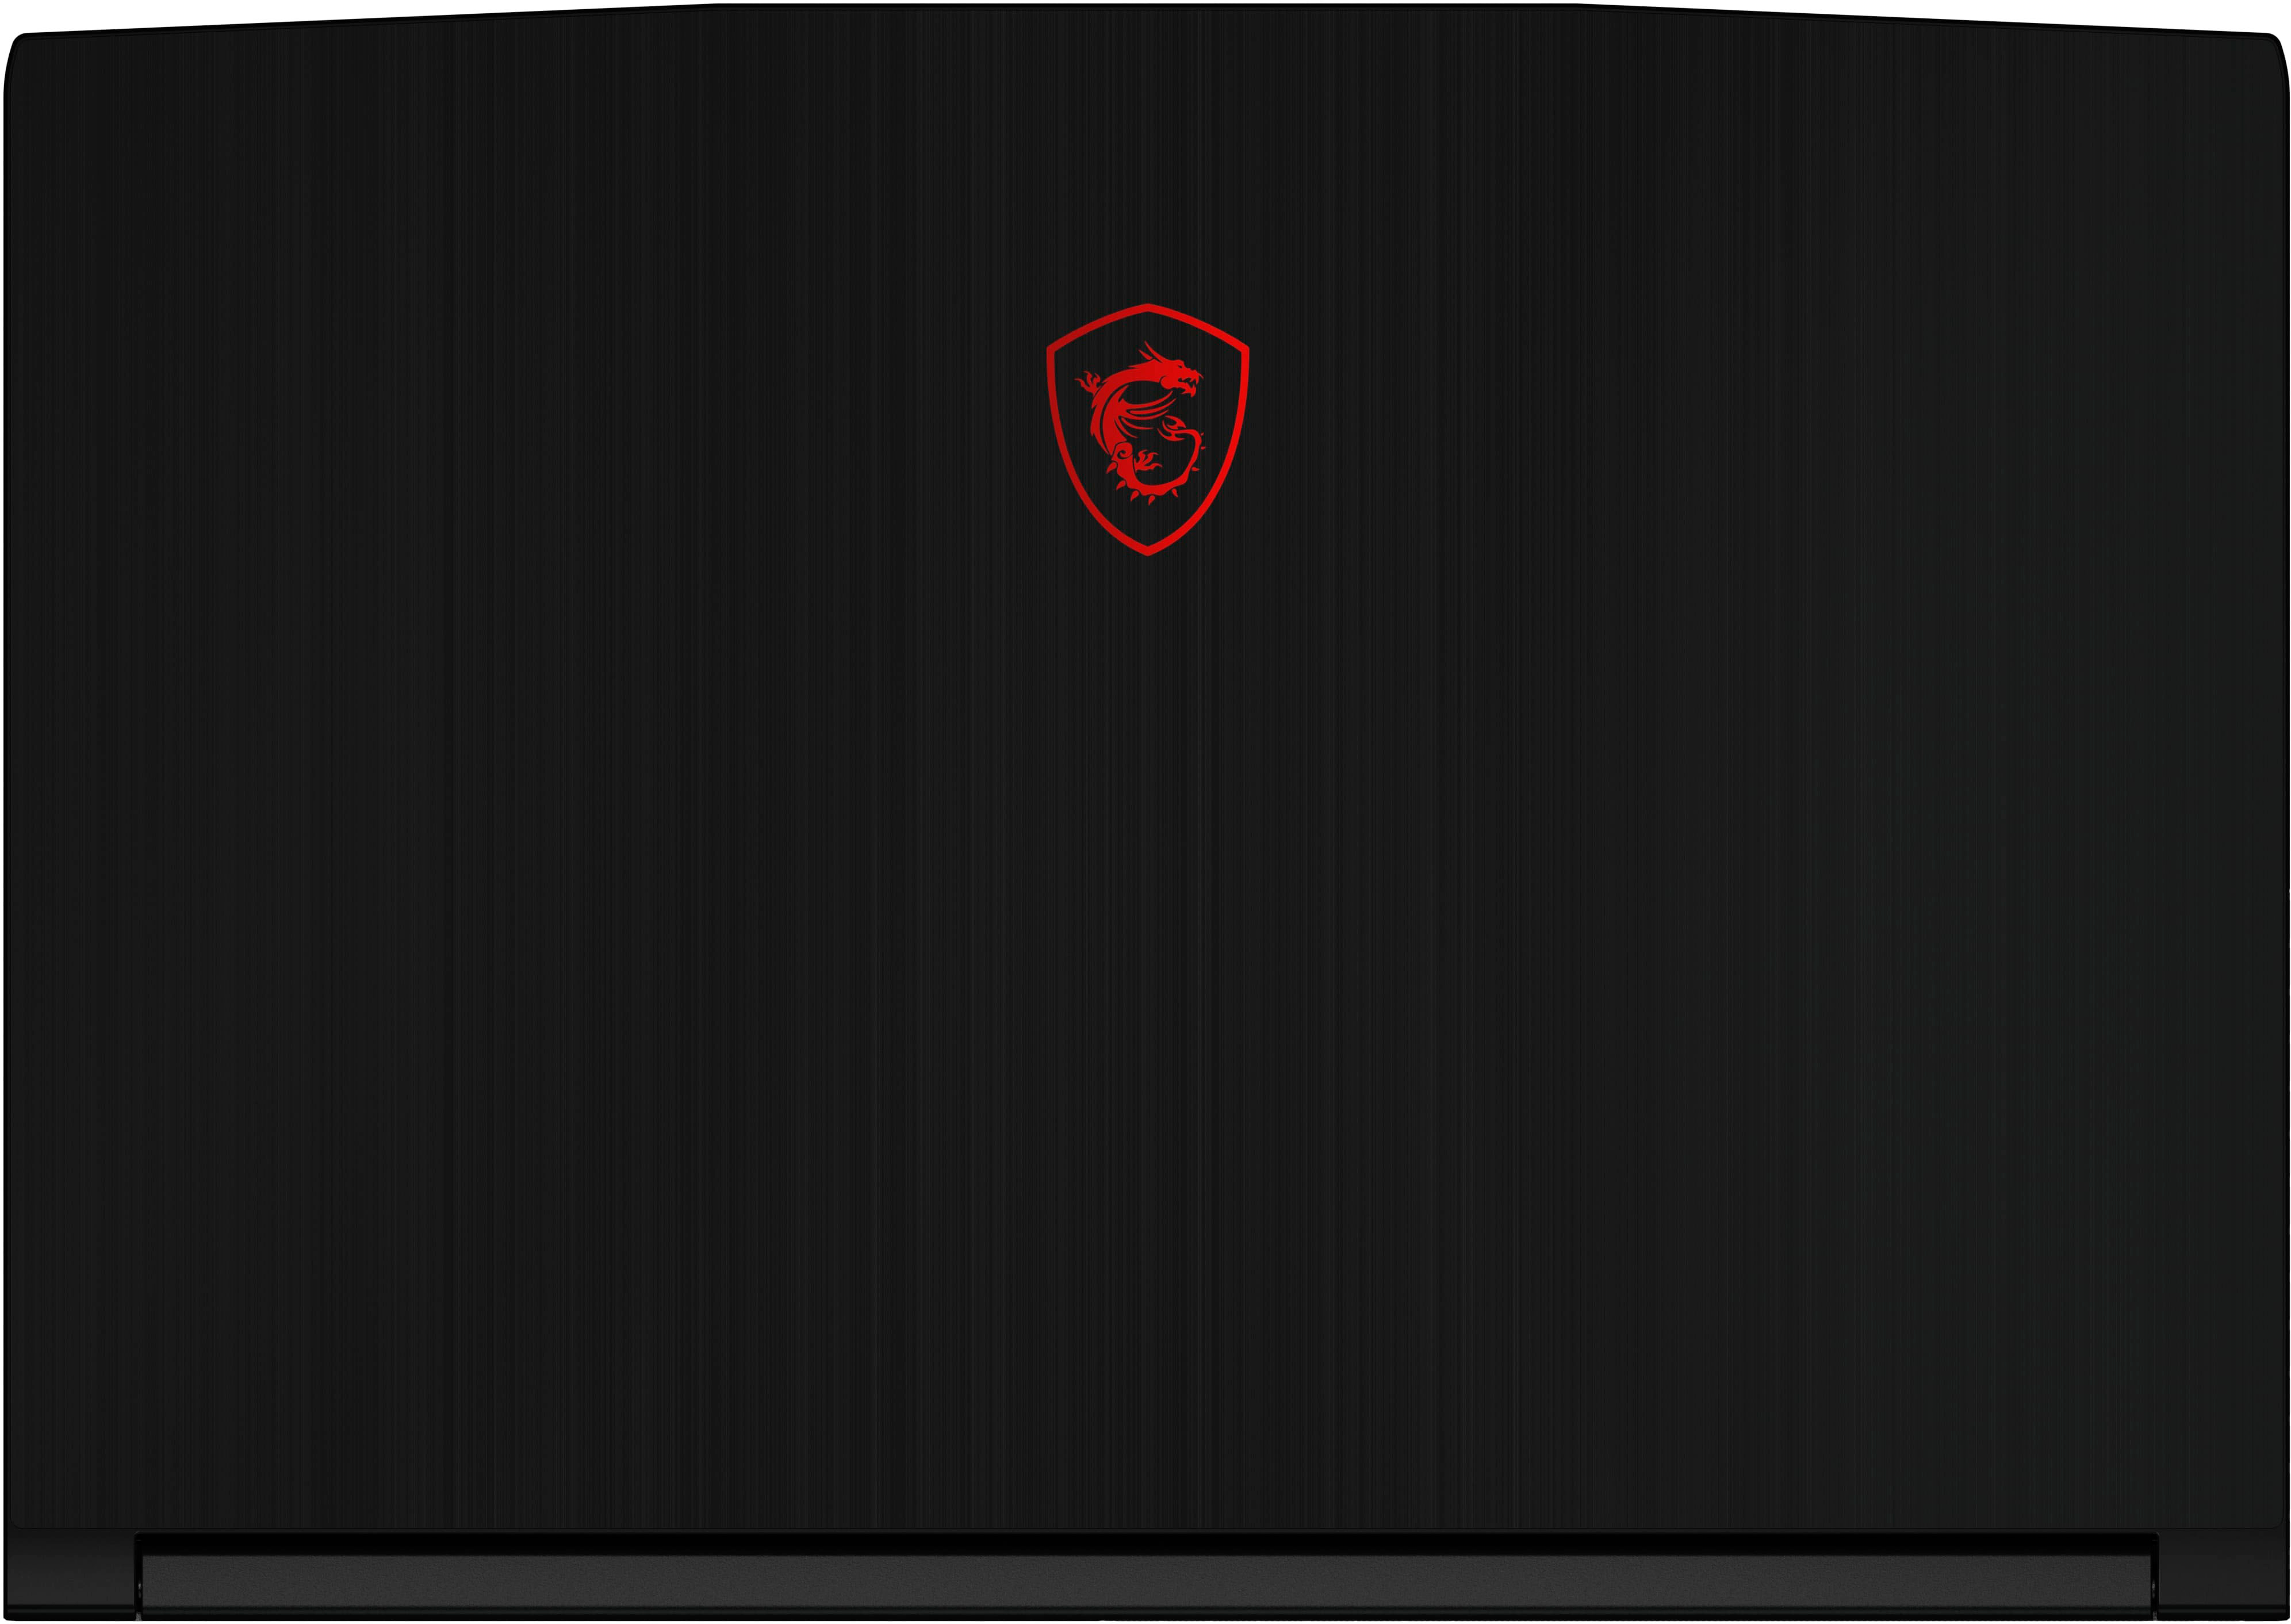 MSI GL63 Gaming Laptop PC 256GB SSD +1TB HDD - 6 Core i7-8750H - 8GB DDR4  RAM - Geforce GTX1050ti - 120hz 15.6 IPS LCD (Black - Red Backlight)